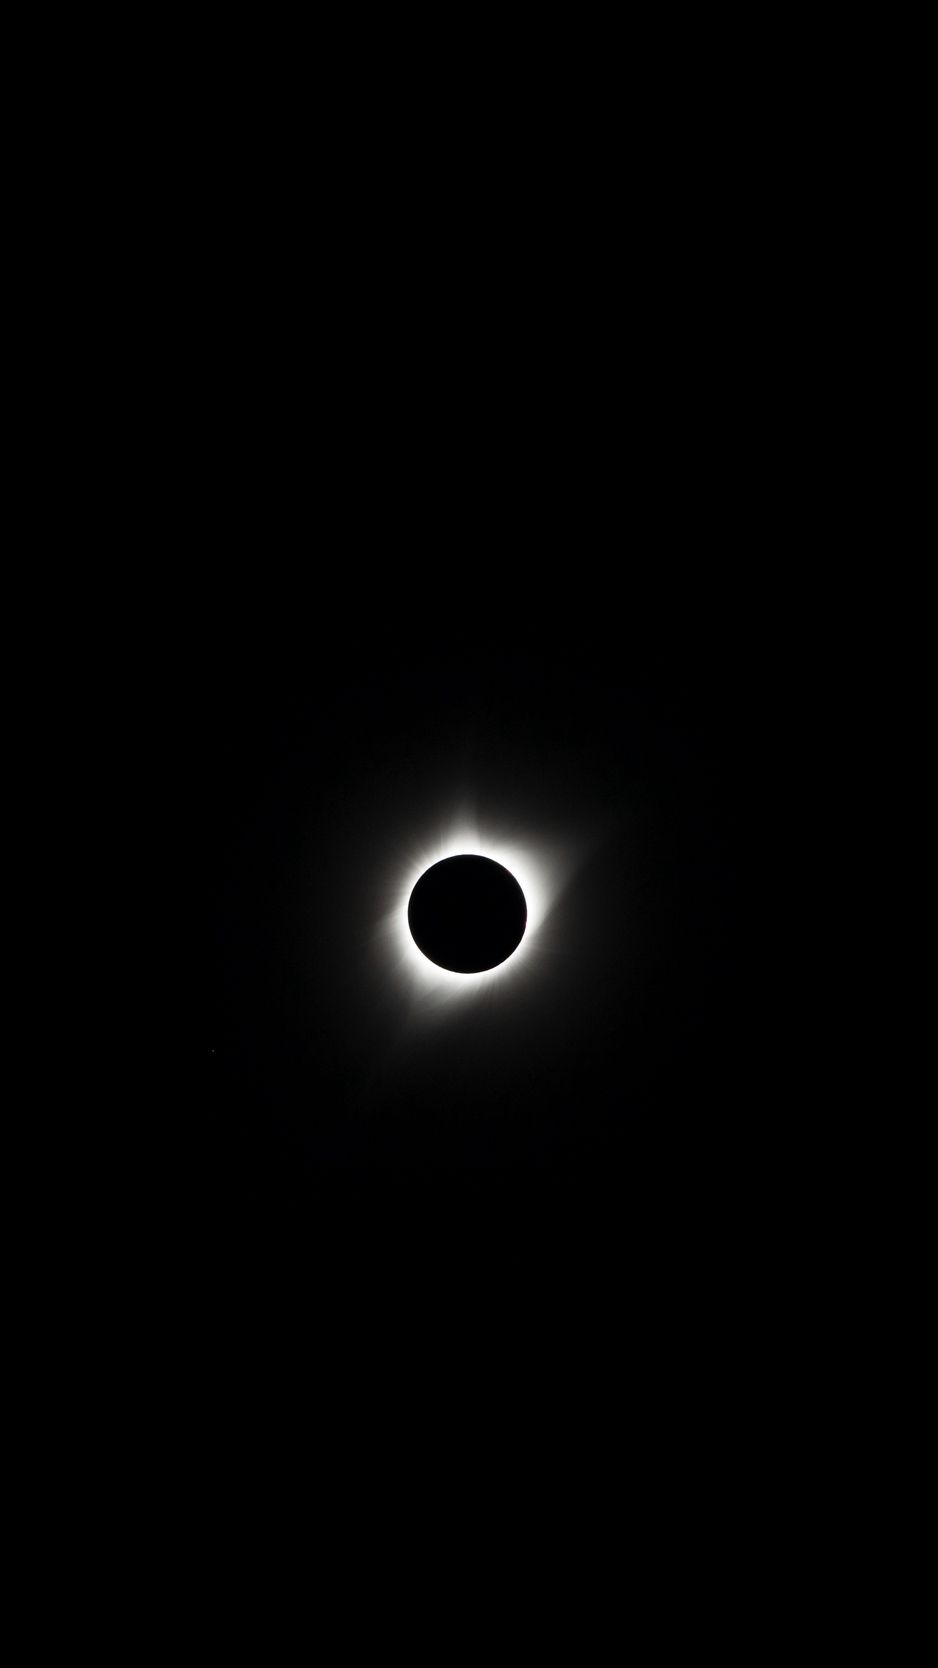 Download wallpaper 938x1668 eclipse, moon, dark background iphone